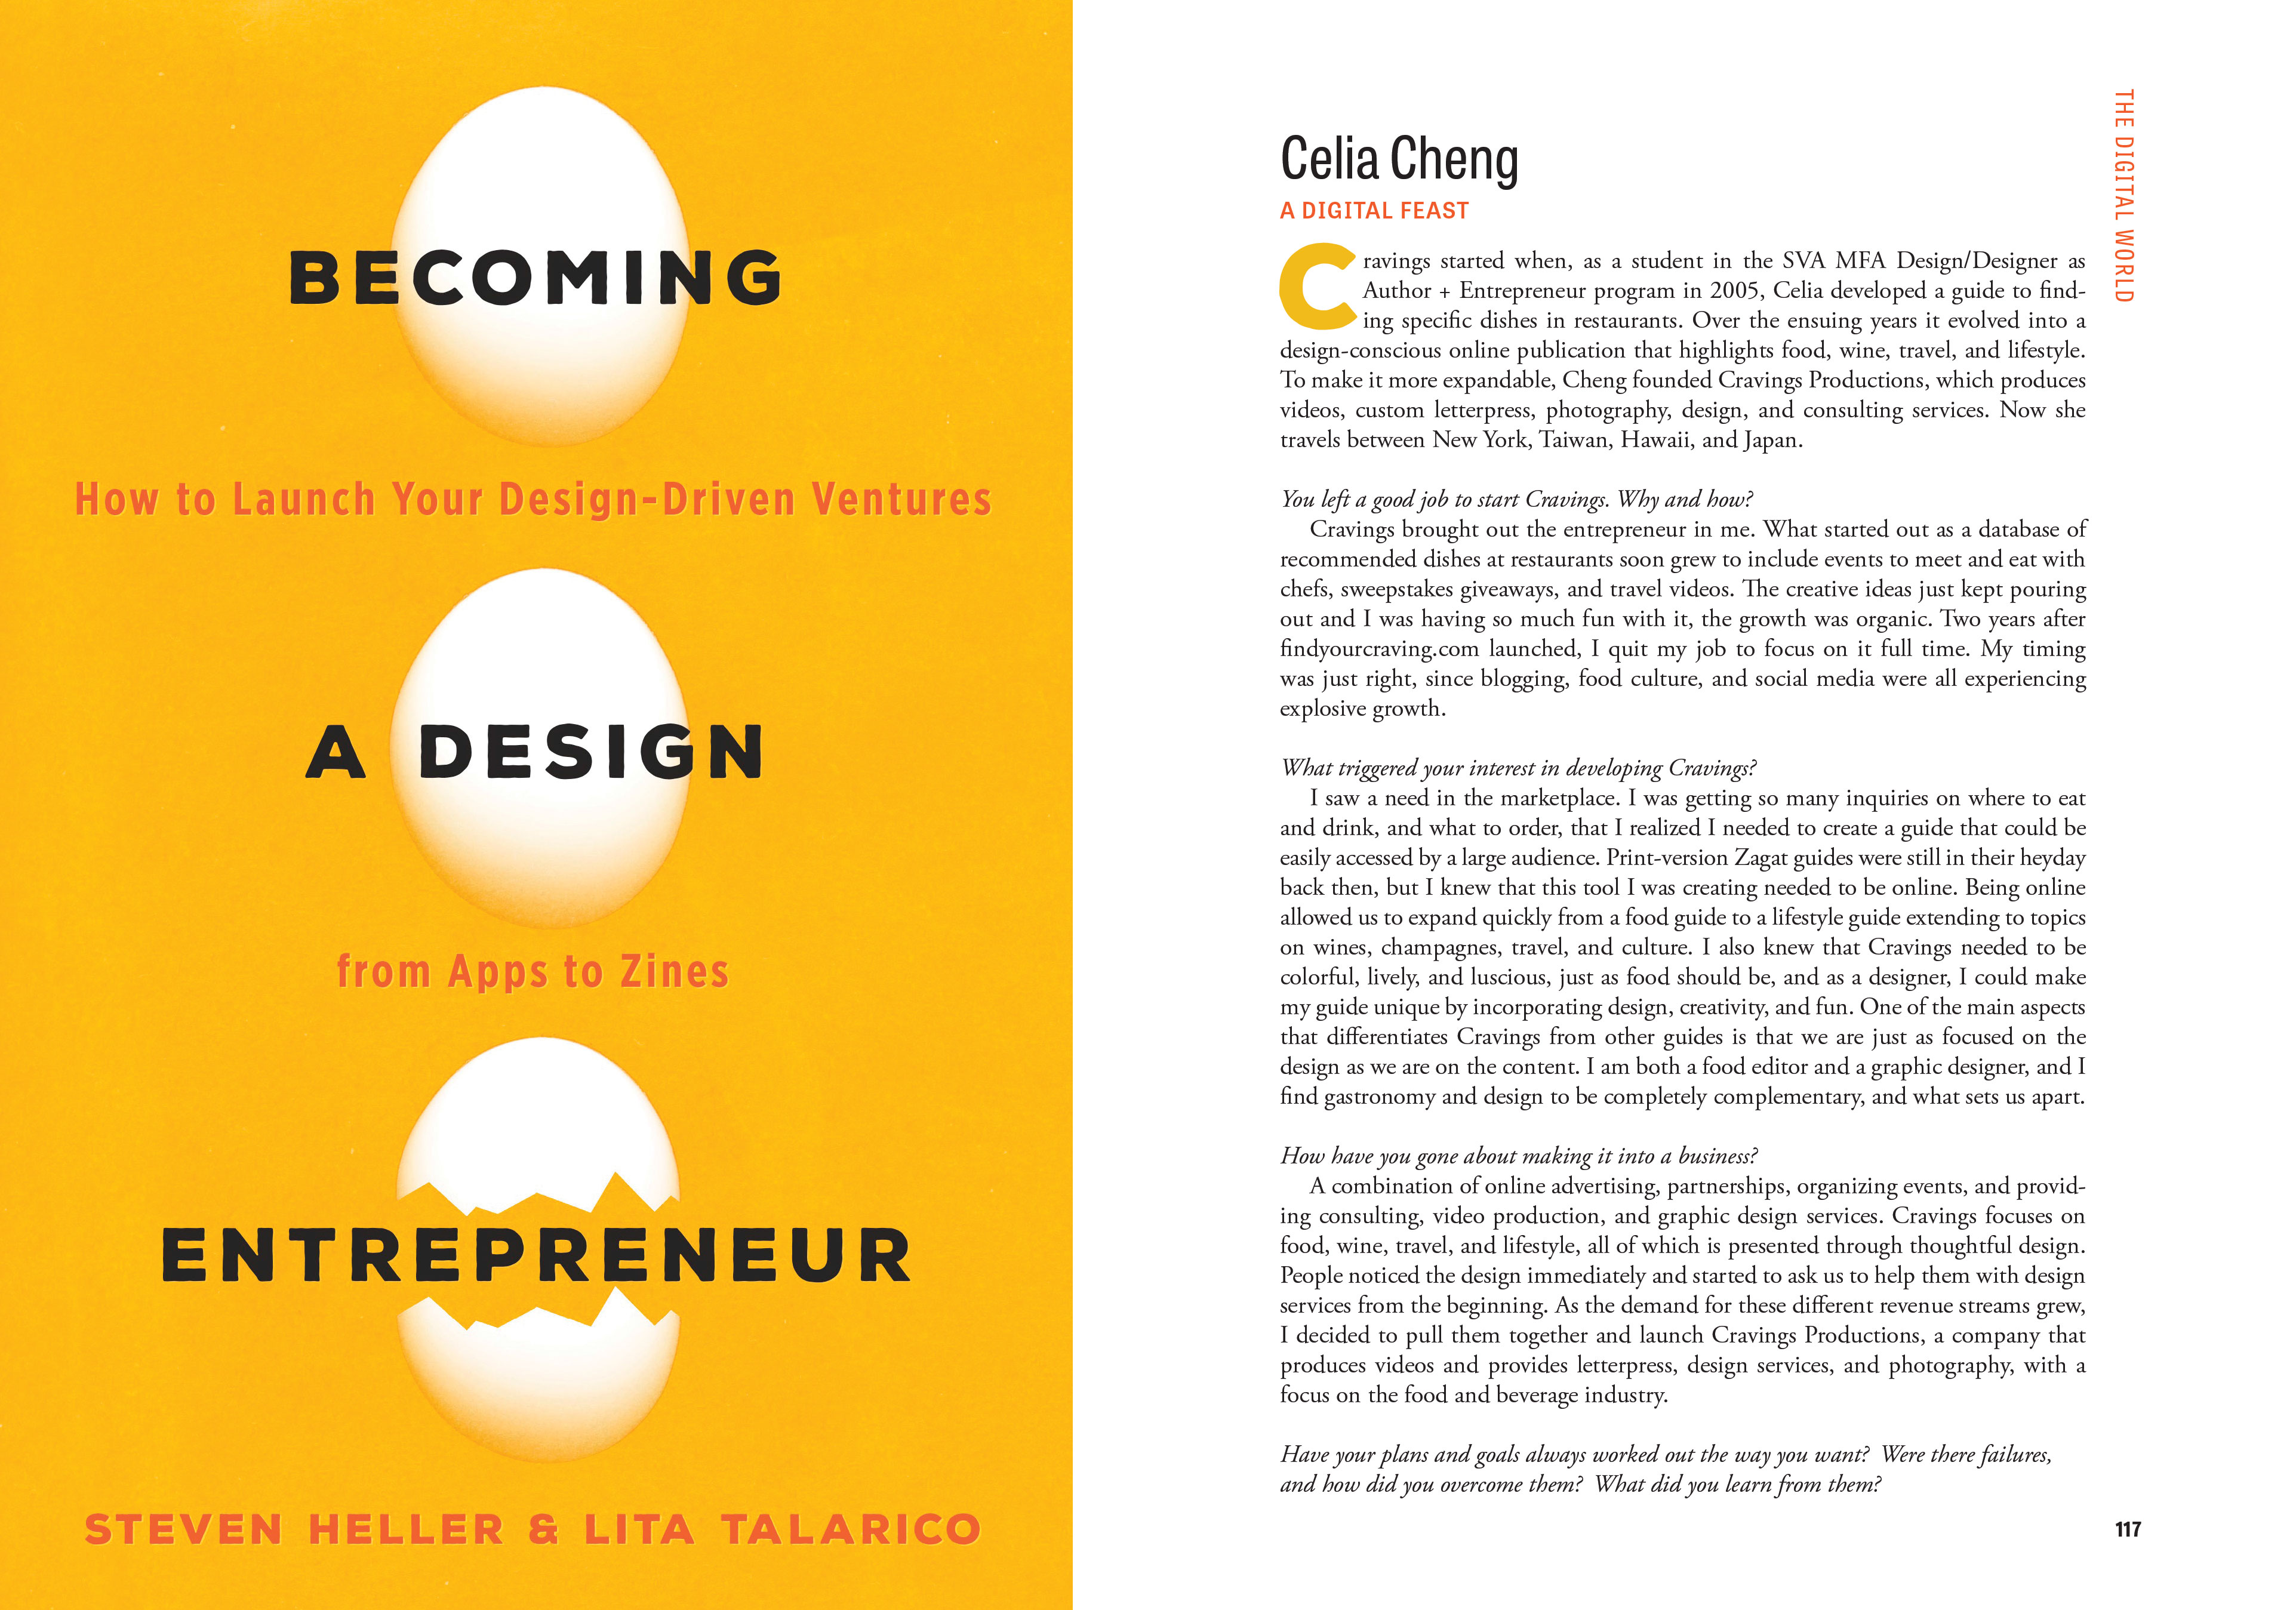 Becoming a Design Entrepreneur: Celia Cheng, A Digital Feast